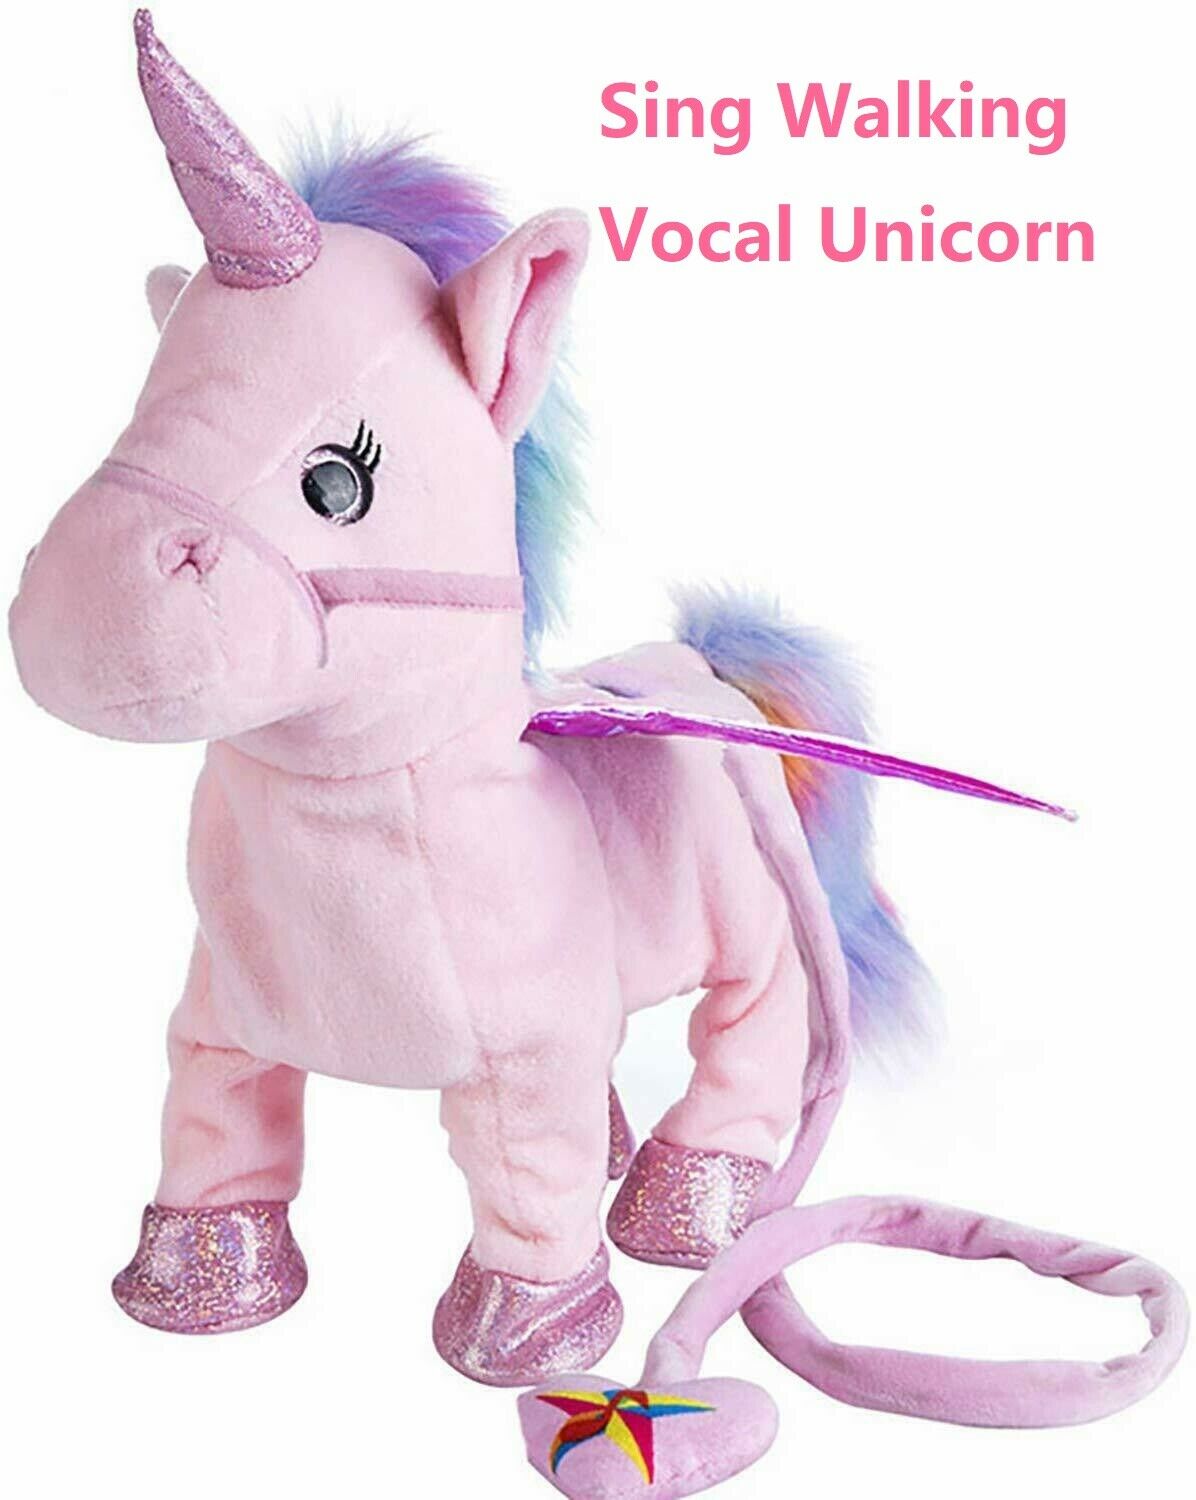 Funny Electric Walking Music Unicorn Plush Toy Stuffed Animal Toy